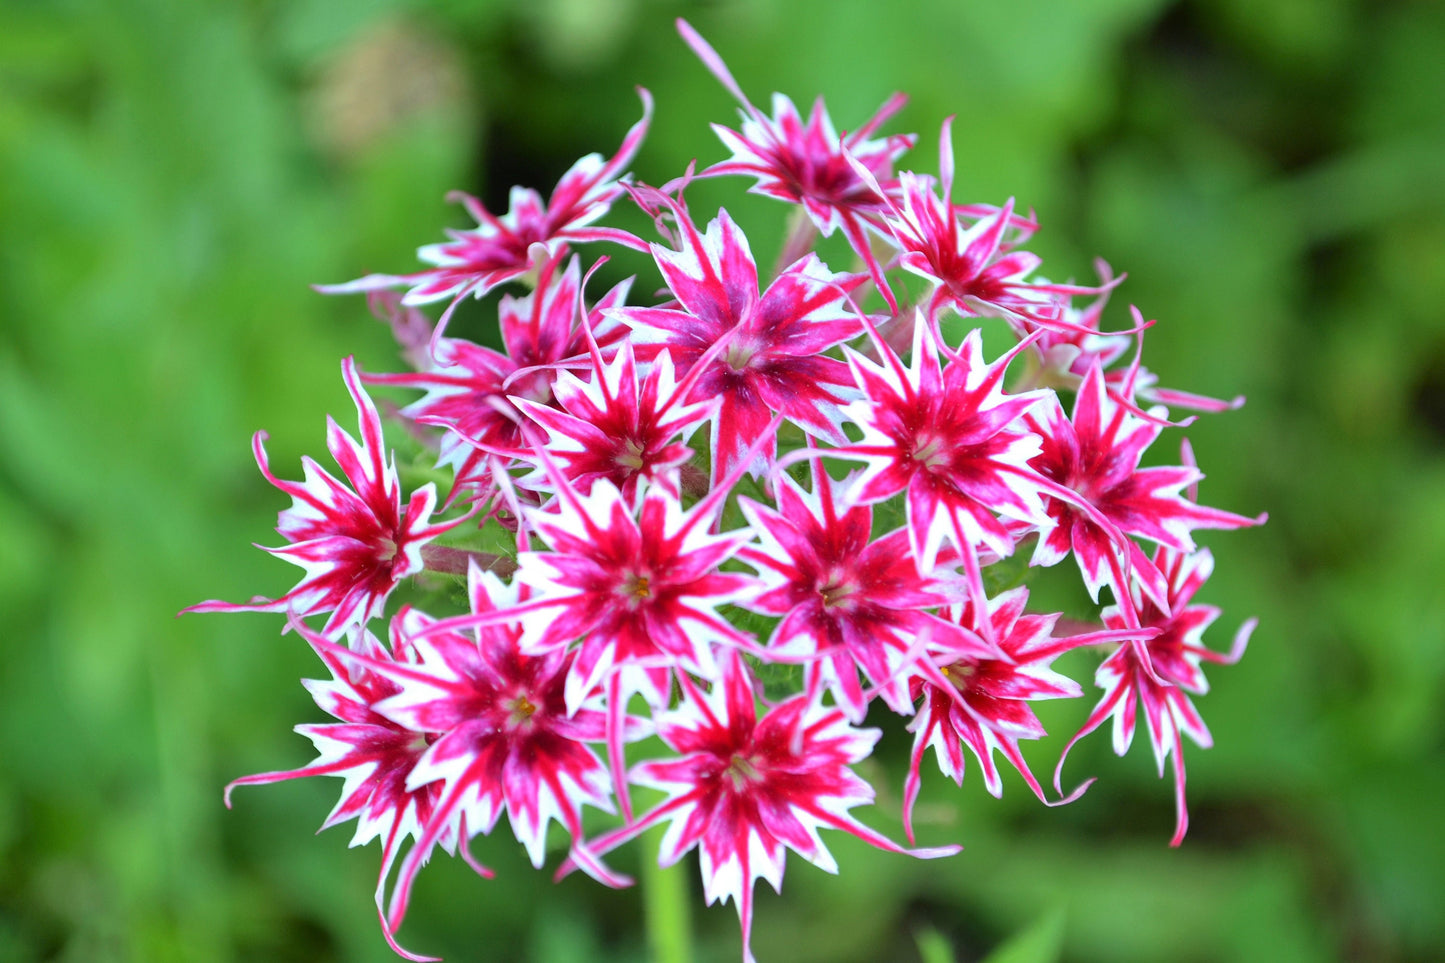 100 TWINKLE DWARF PHLOX Drummondii Cuspidata var. Stellaris Star Mix Two Tone Mixed Colors Pink Purple Red White Flower Seeds